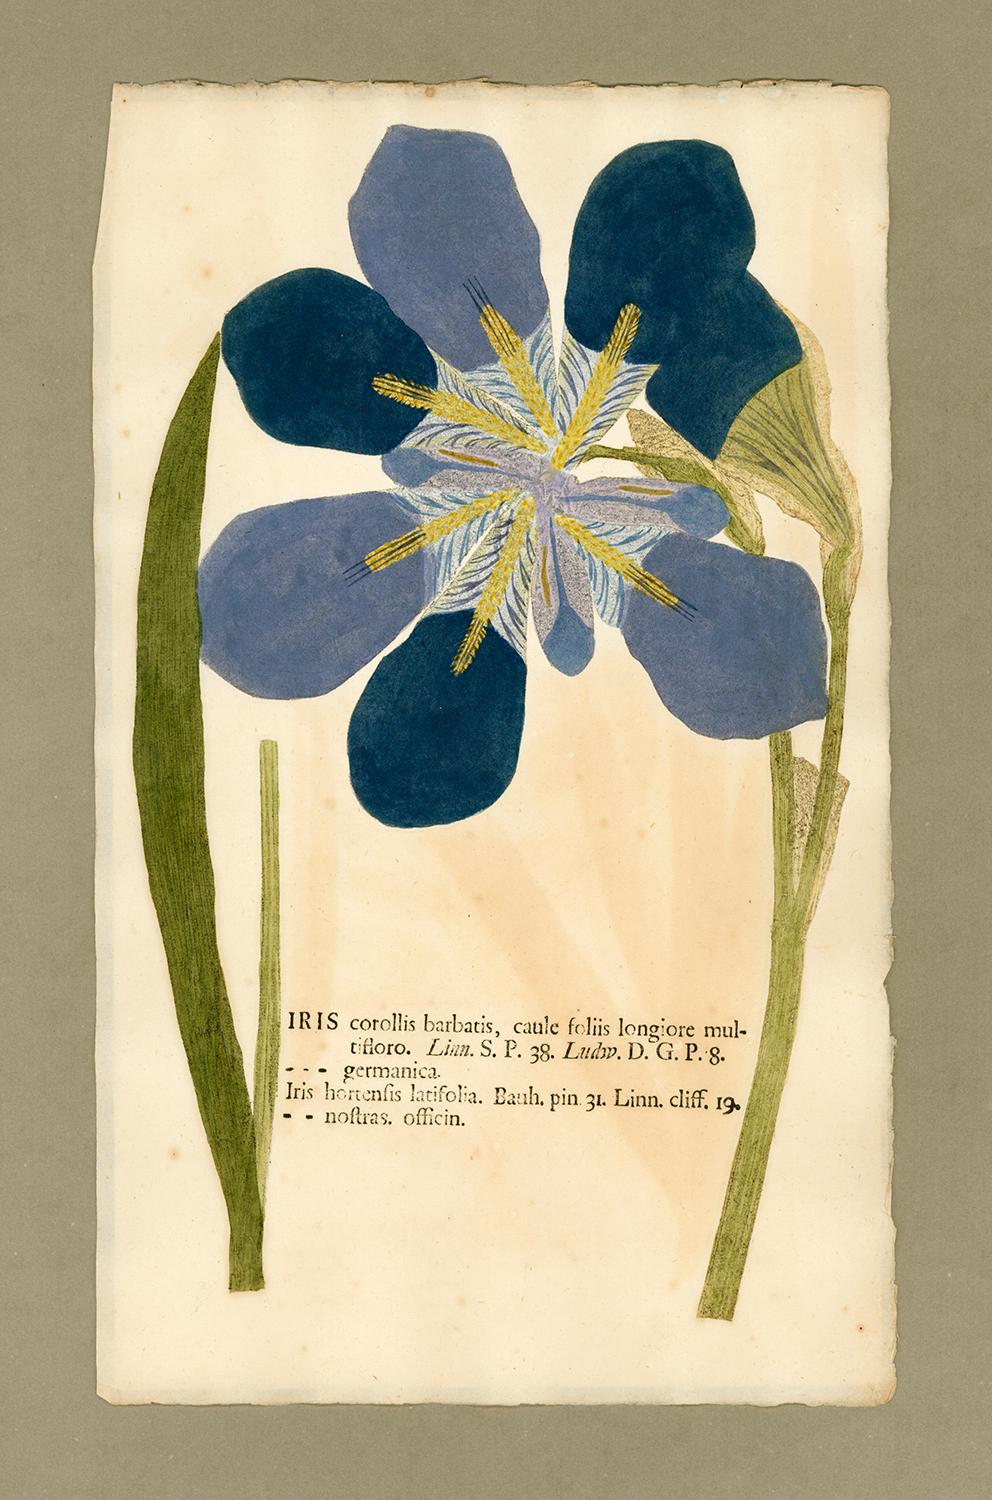 Johann Hieronymus Kniphof  Black and White Photograph - Botanica in Originali, seu Herbarium Vivum - "Nature Printed Plants" -14